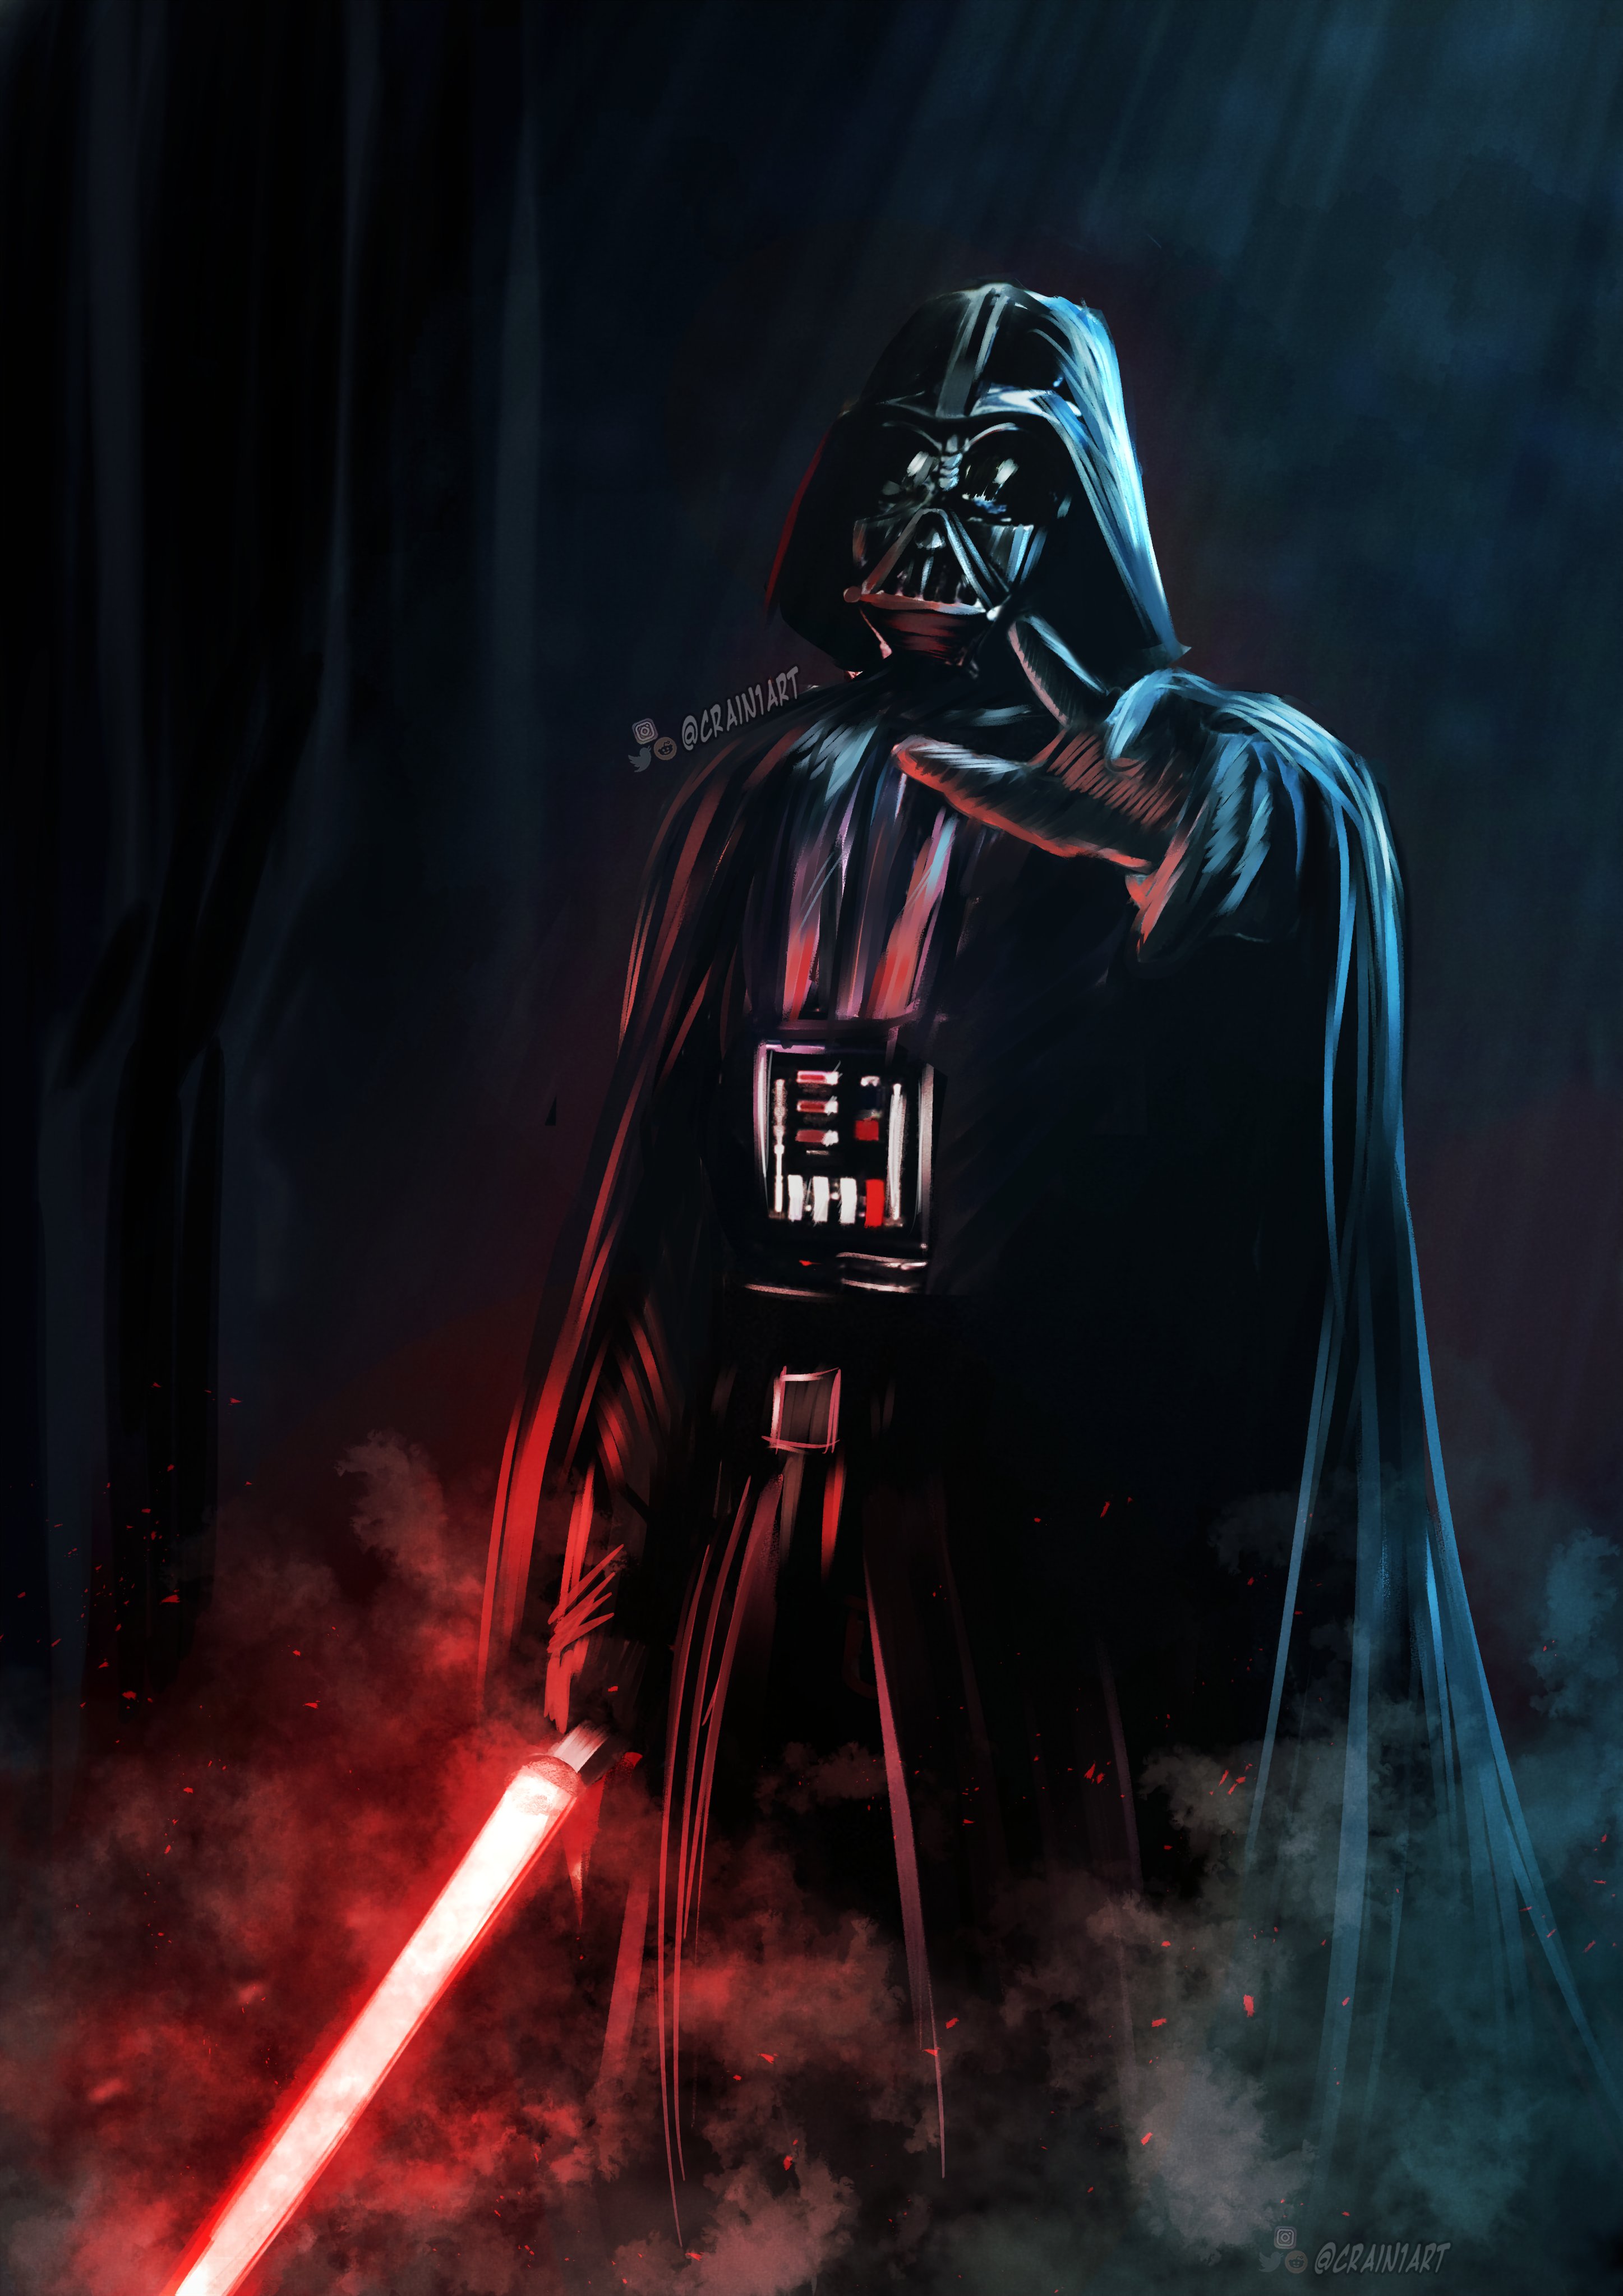 Ongeldig Investeren hoogtepunt Crain Art on Twitter: "Darth Vader - FanArt #StarWars #Darthvader #Darkside  https://t.co/teSYgenZ0E" / Twitter